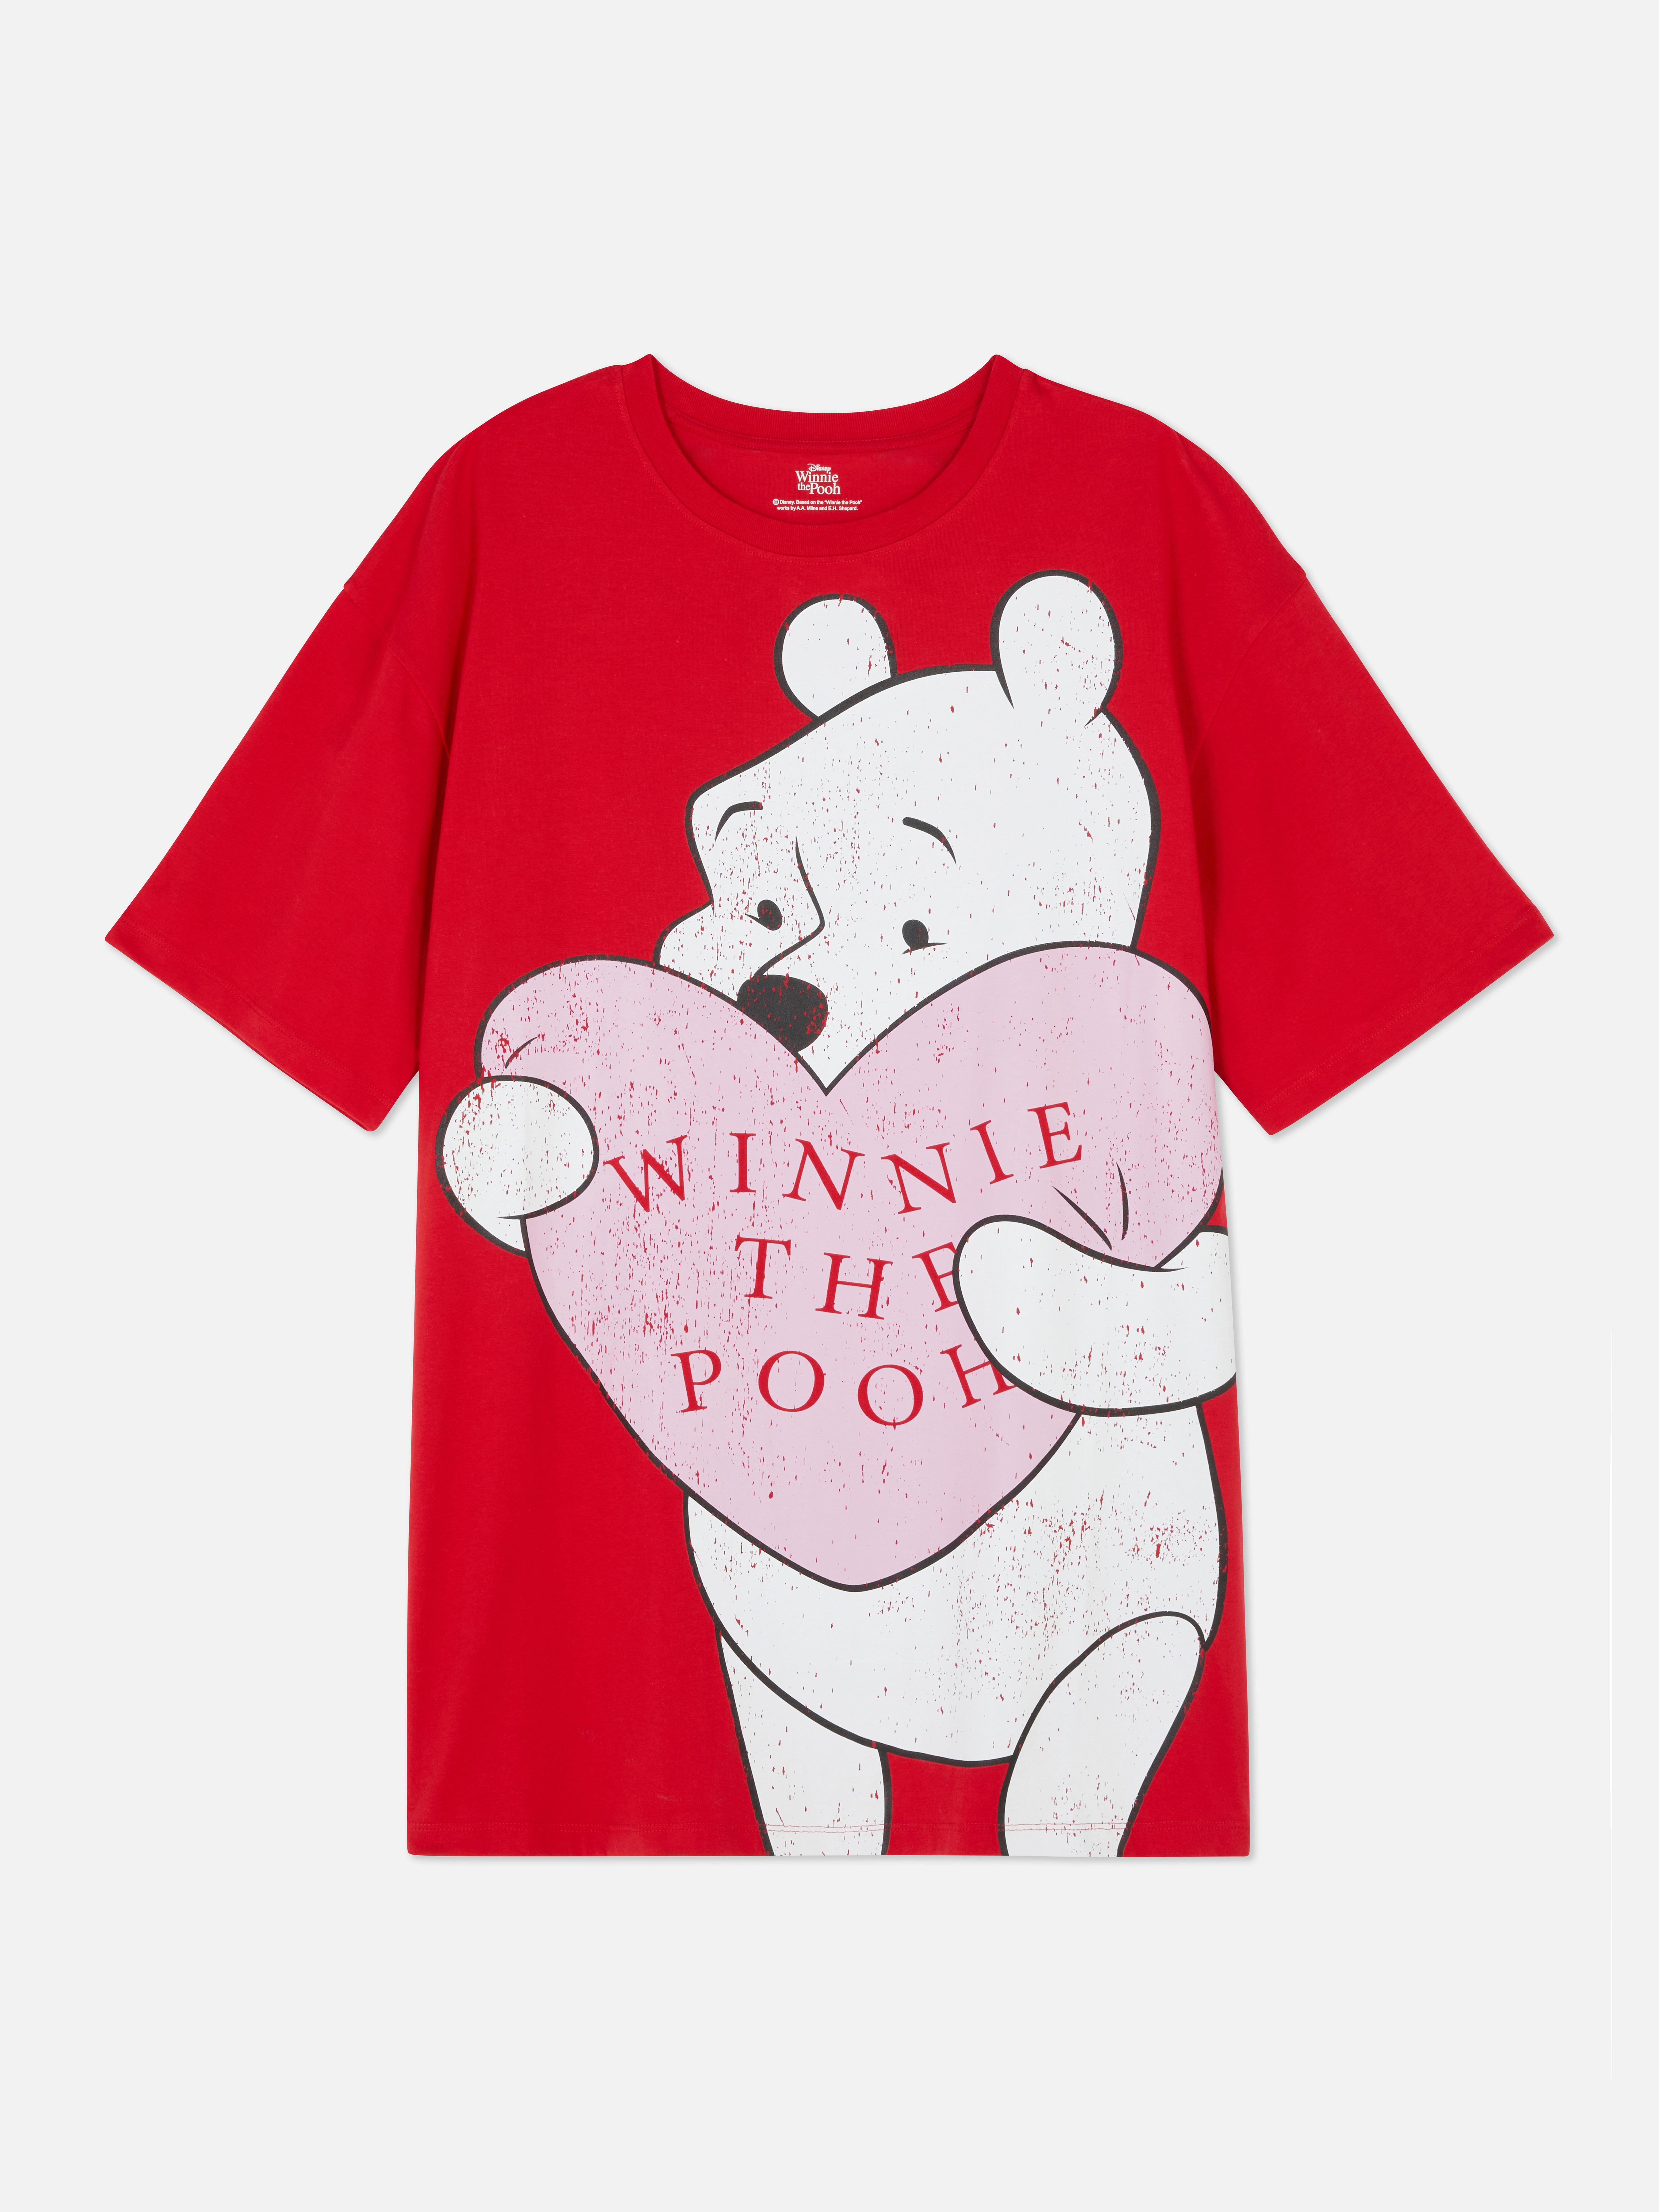 Disney Character Oversized Sleep T-shirt